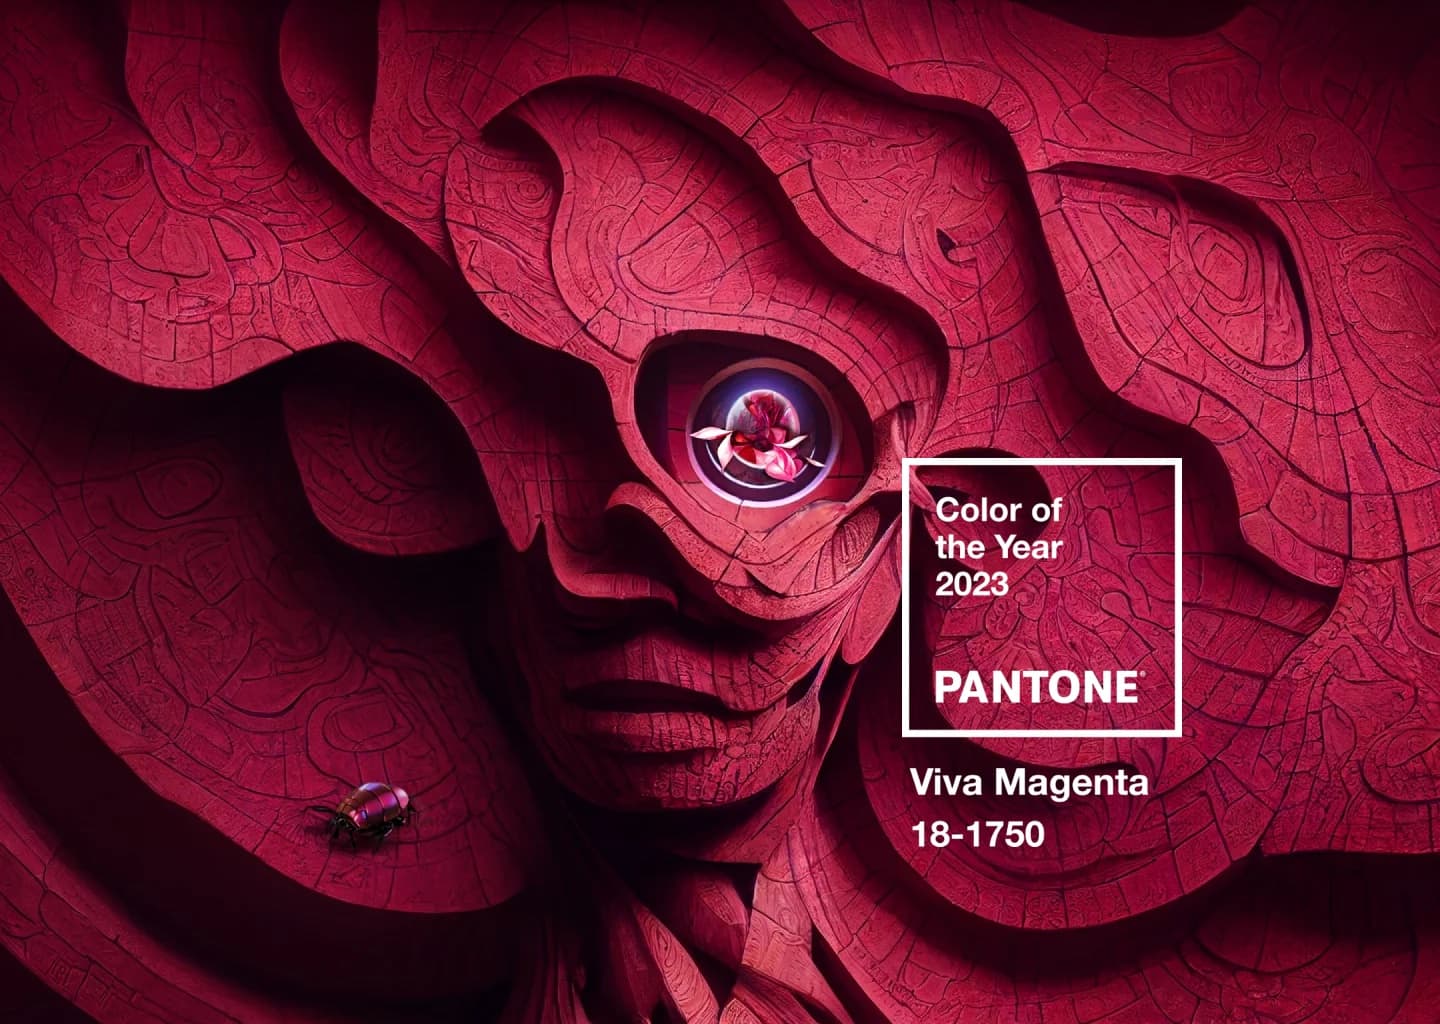 Pantone introduces Color of the Year 2023 Pantone 181750 Viva Magenta